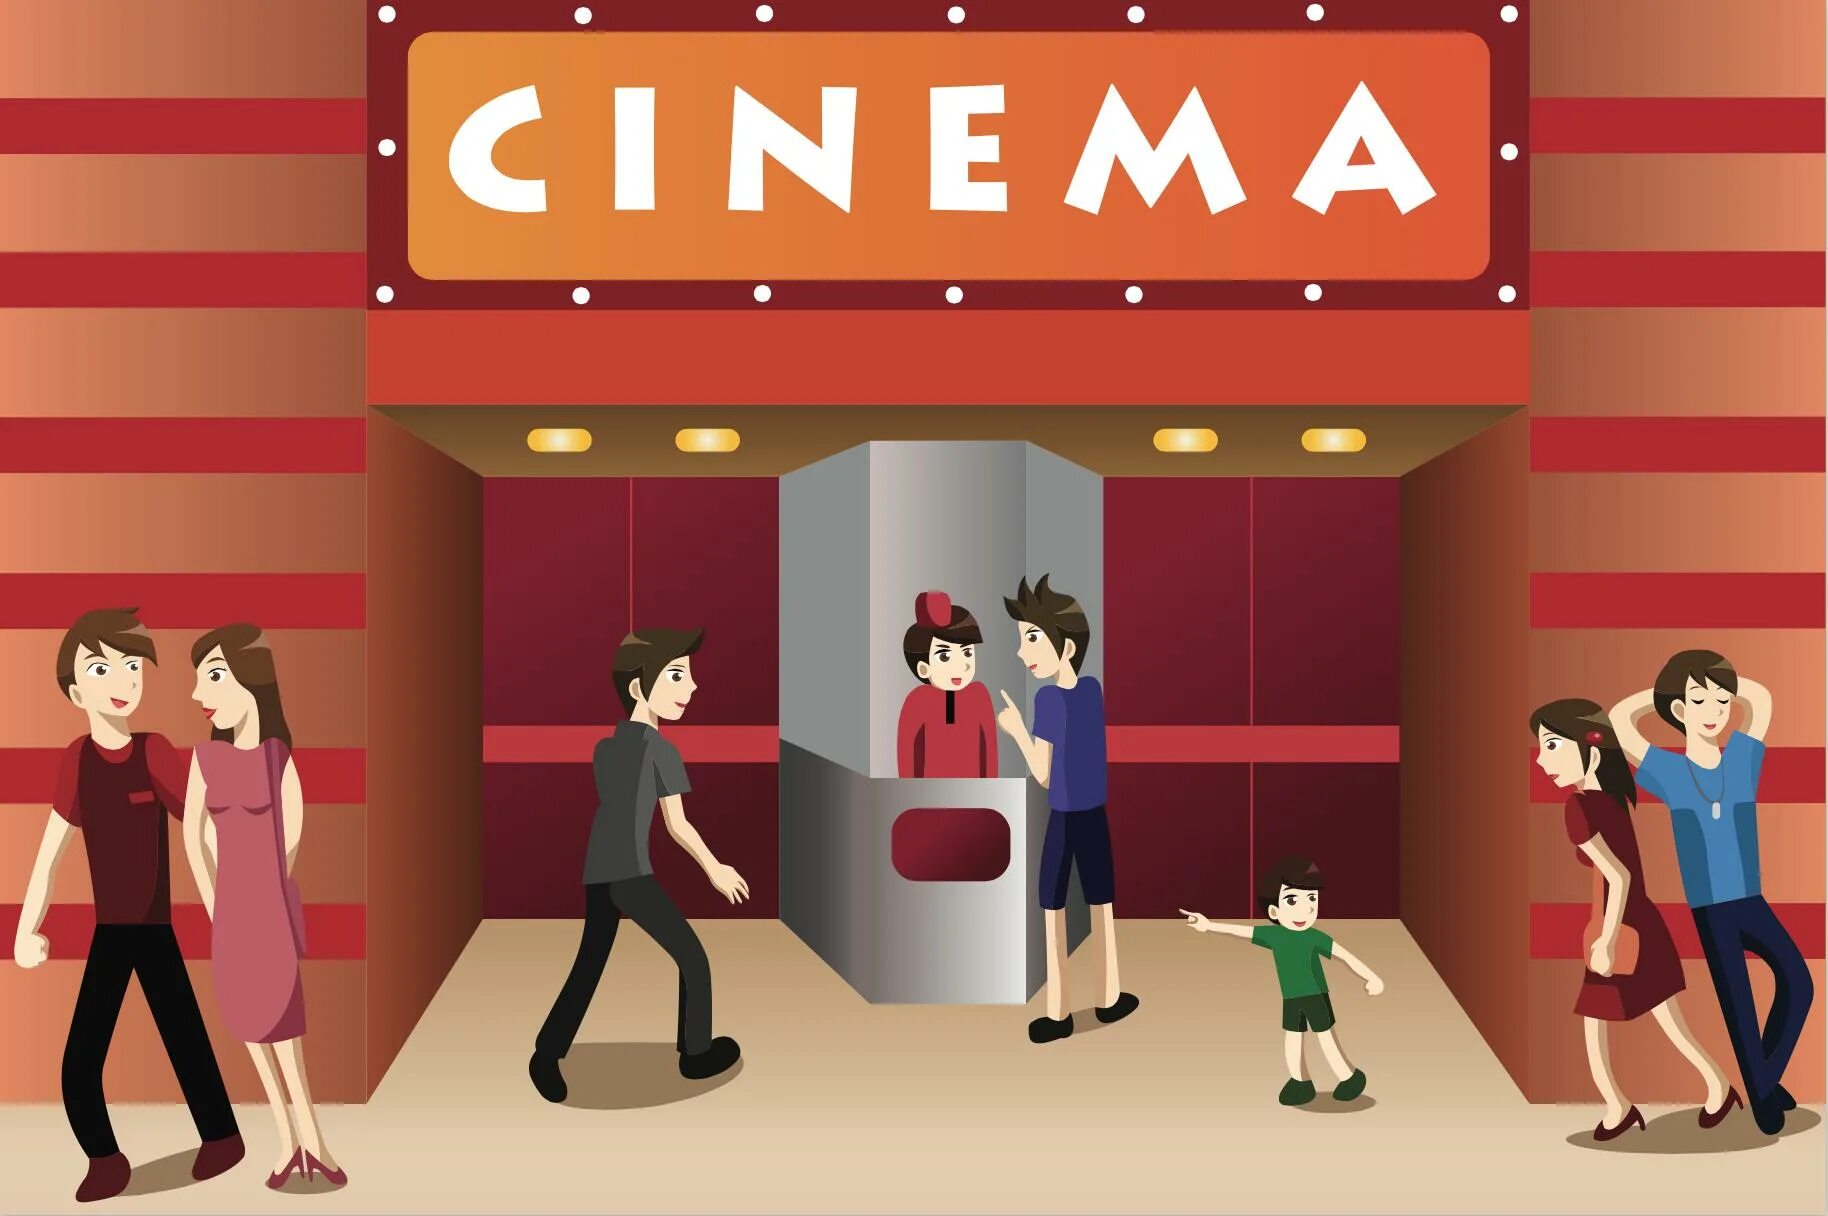 The cinema is than the library. Cinema картина для детей. Кинотеатр рисунок. Дети идут в кинотеатр рисунок. Нарисовать кинотеатр.